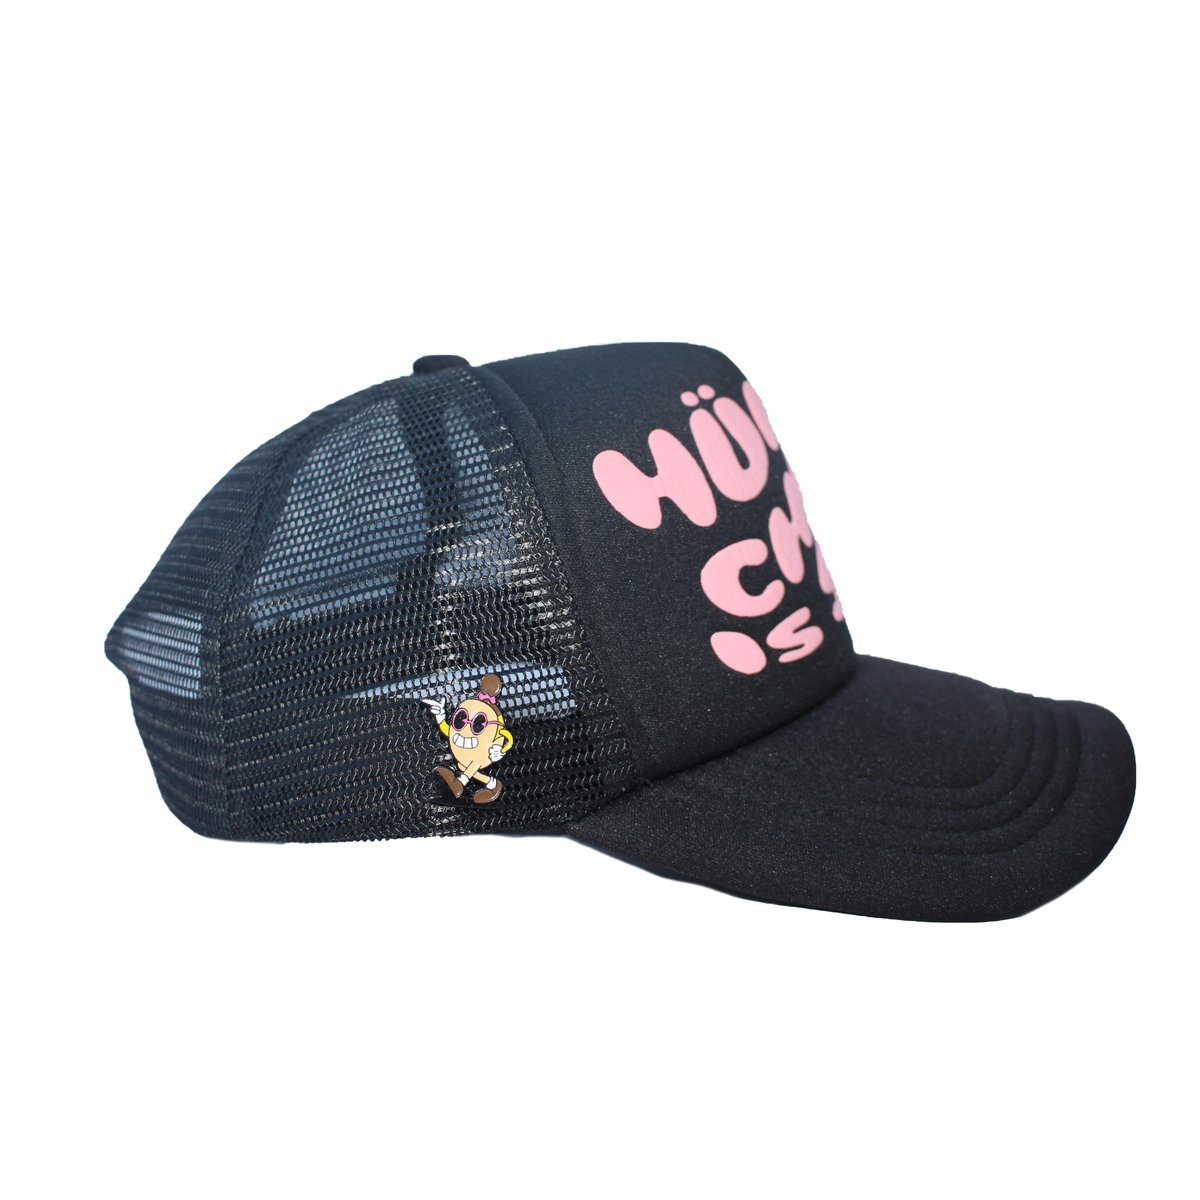 Image of Hüntz Chop Black Pink Trucker Hat 